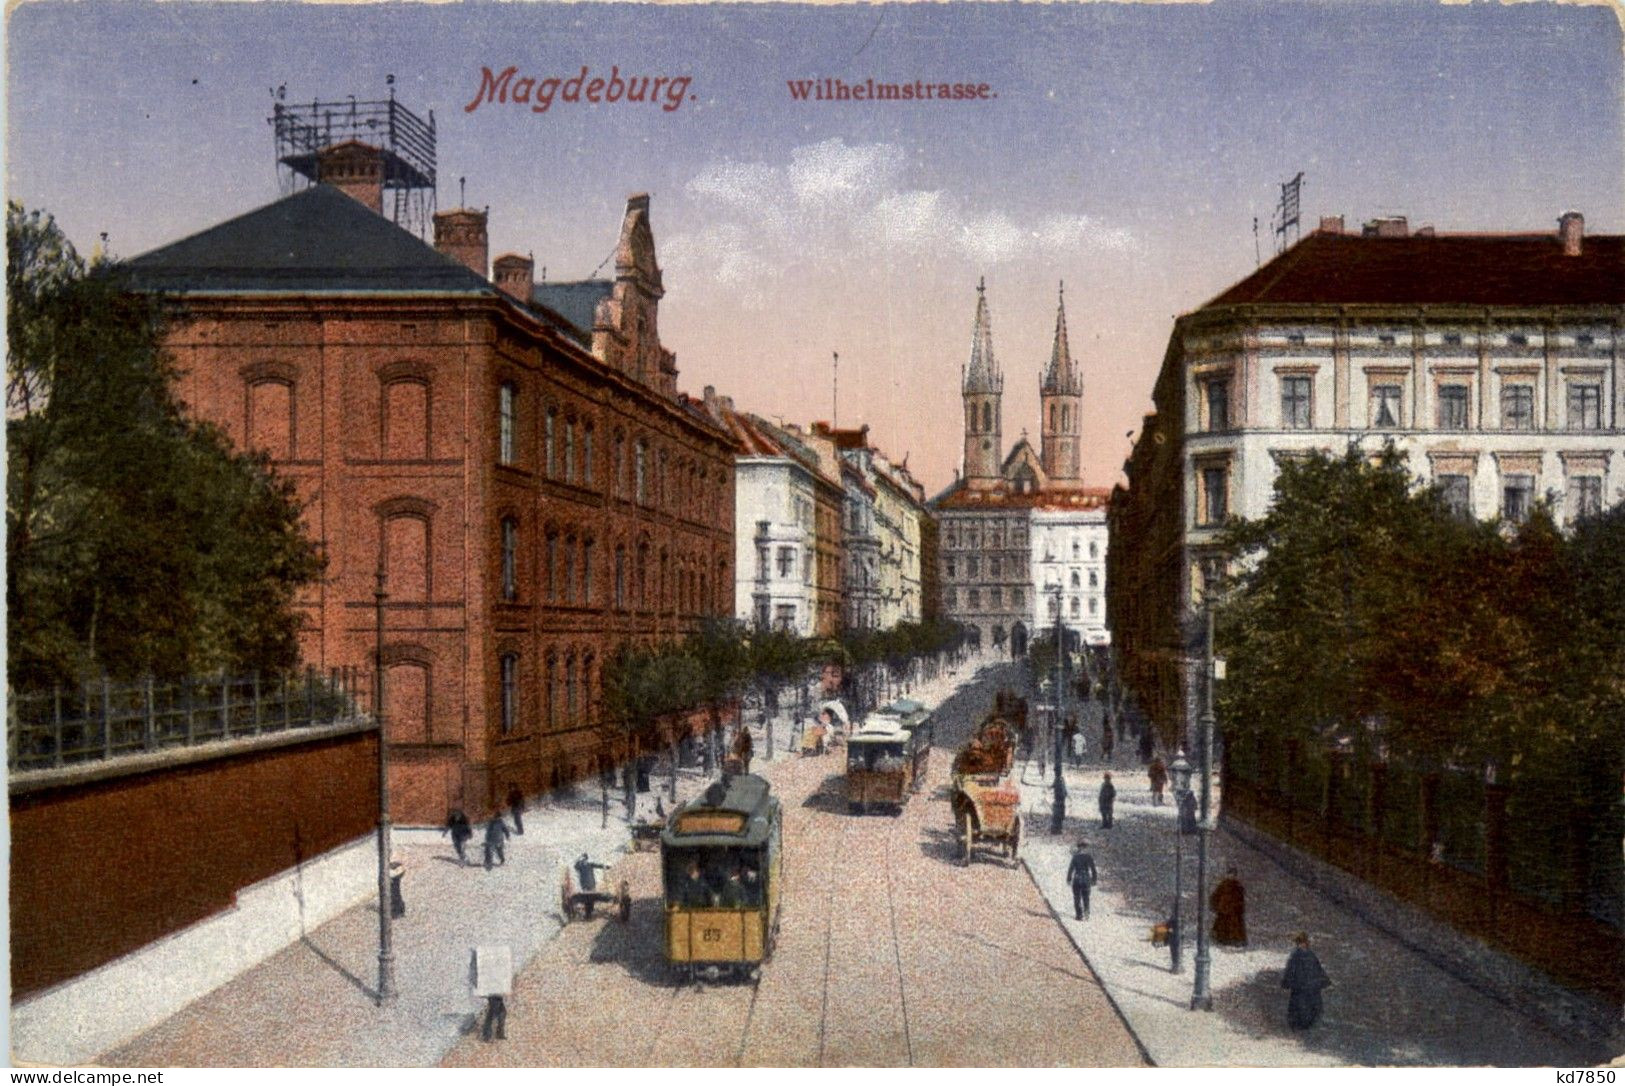 Magdeburg - Wilhelmstrasse - Magdeburg